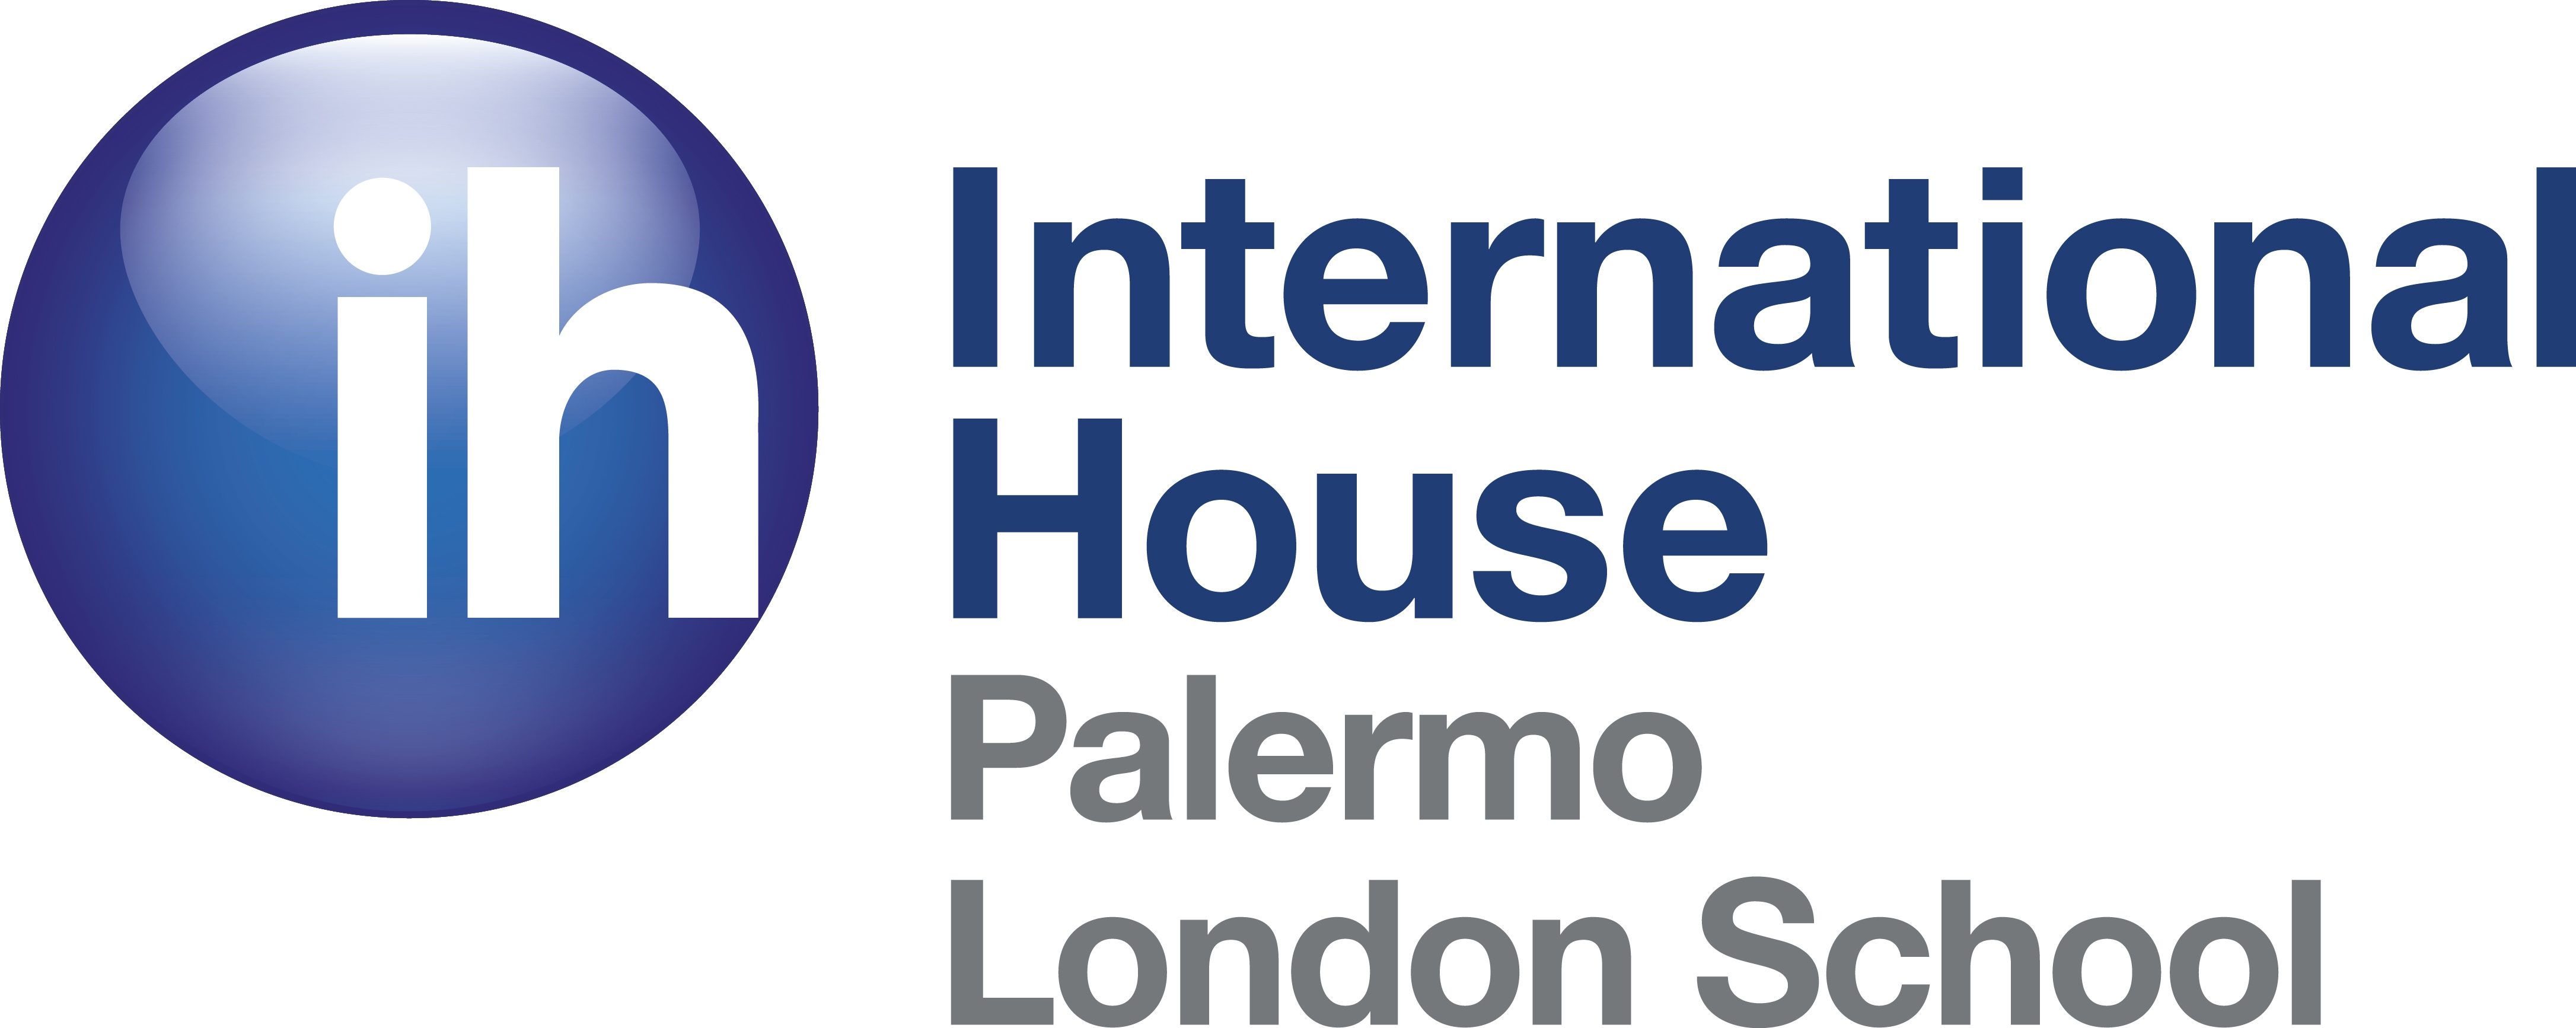 LONDON SCHOOL INTERNATIONAL HOUSE DI FABIOLA CORDARO & C. S.A.S